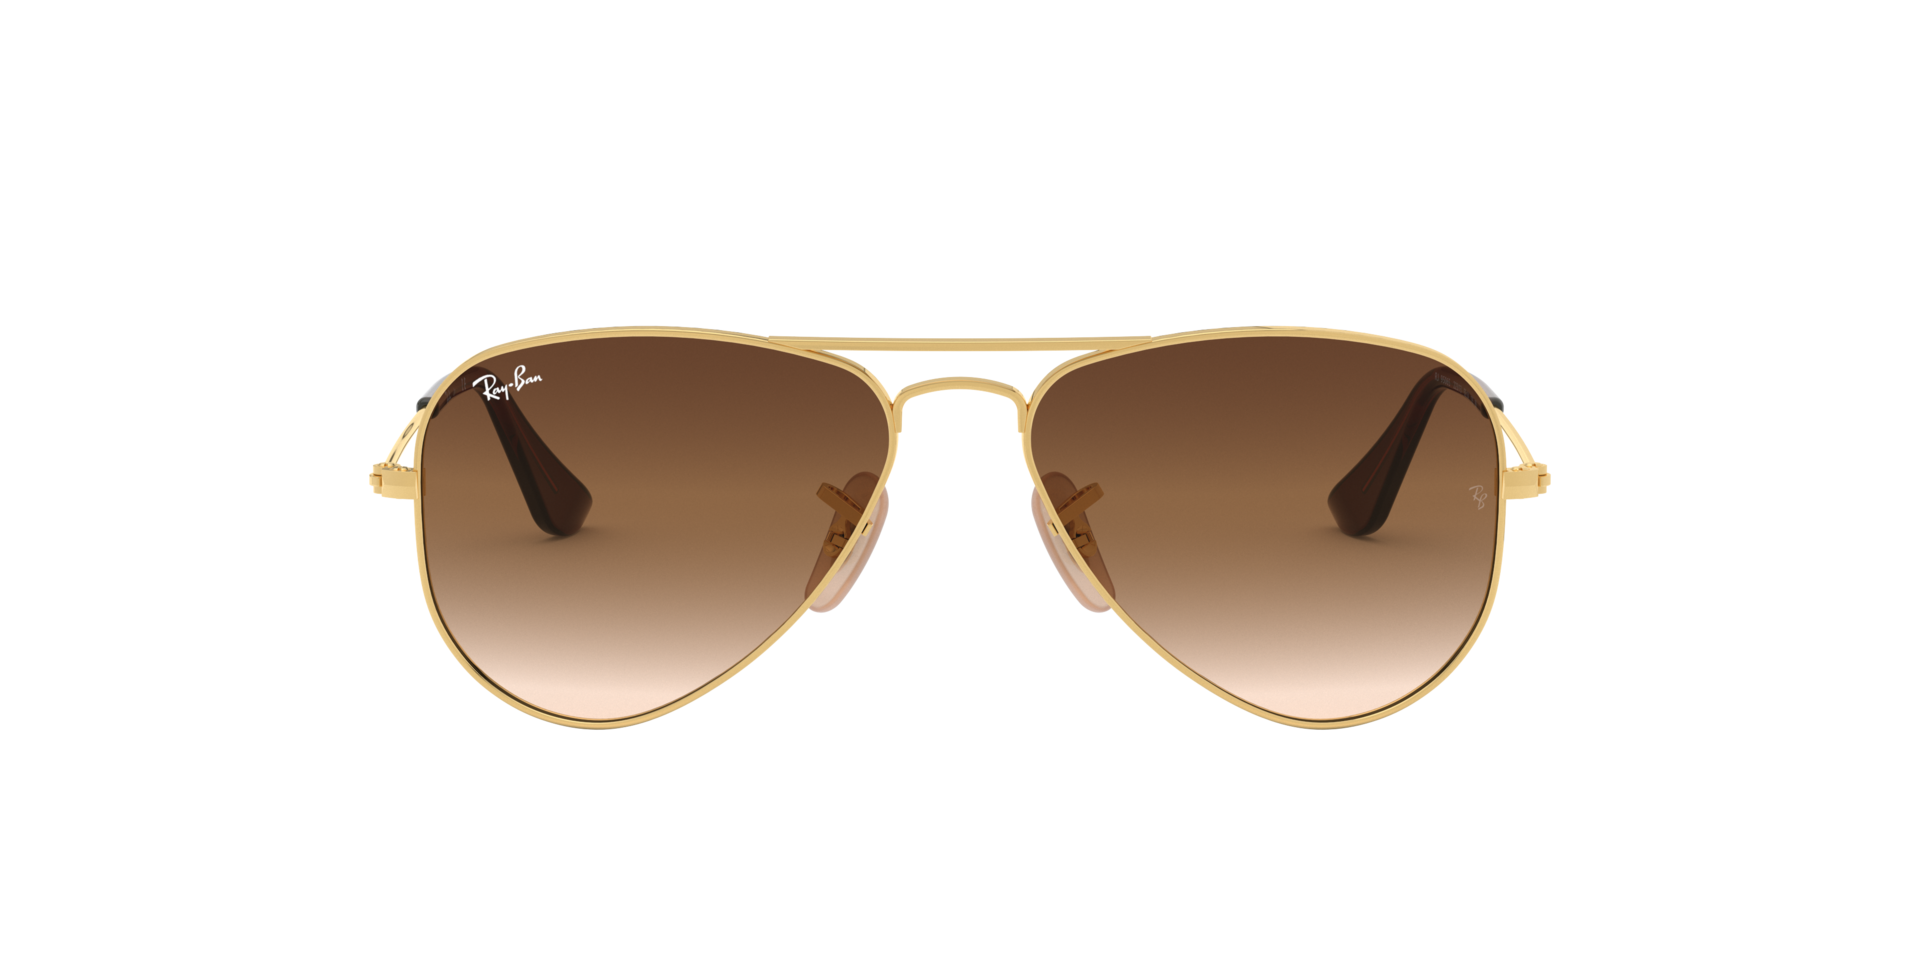 Ray Ban Junior Aviator RJ9506S 201/55 sunglasses for kids – Ottica Mauro